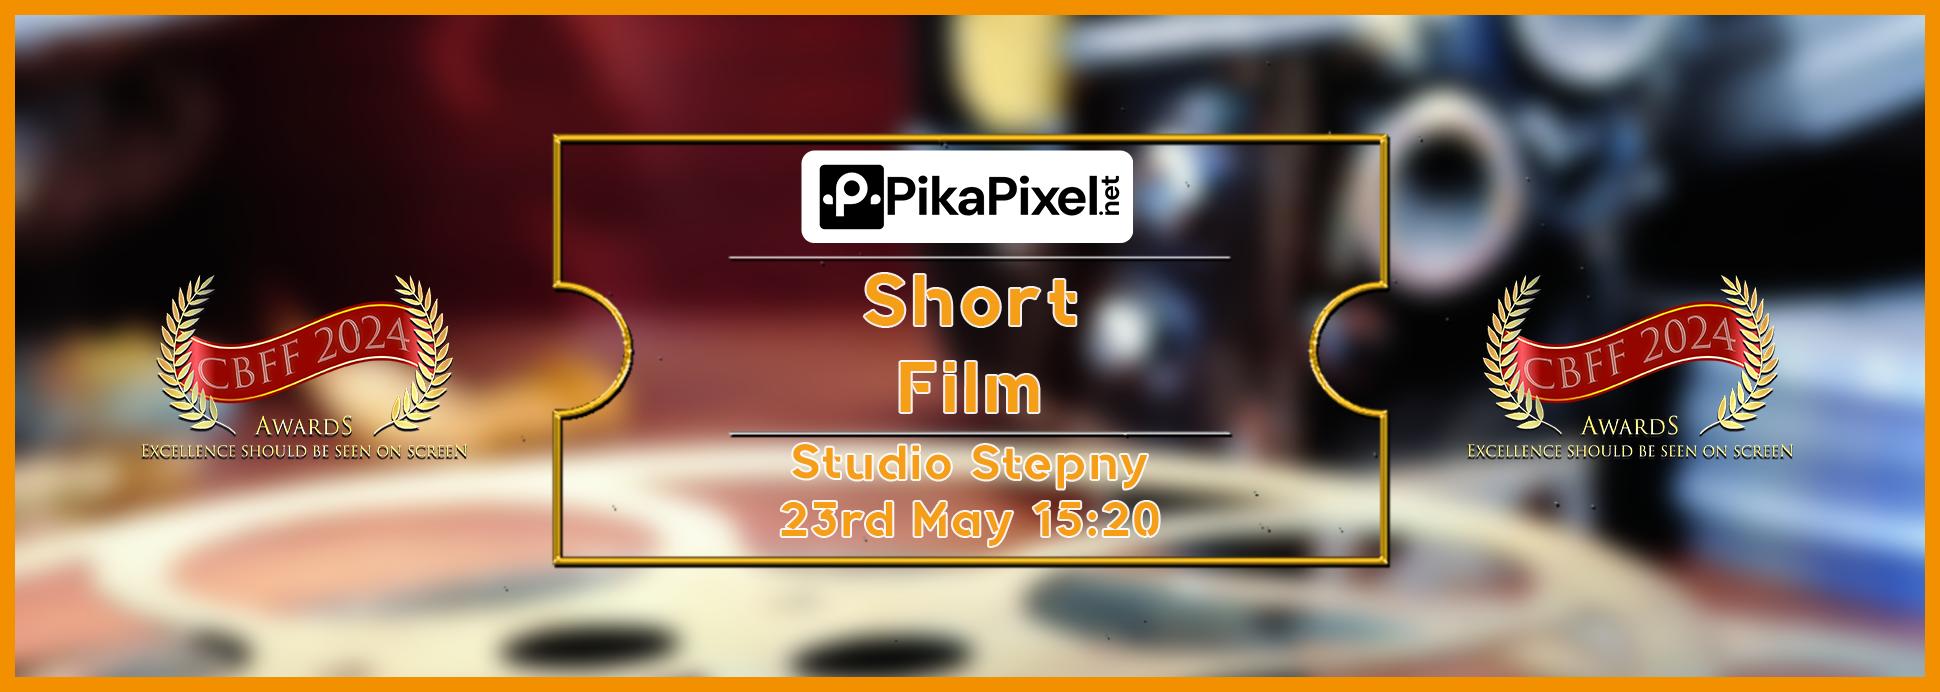 Thursday 23rd 15:20 Studio Stepny Short Film